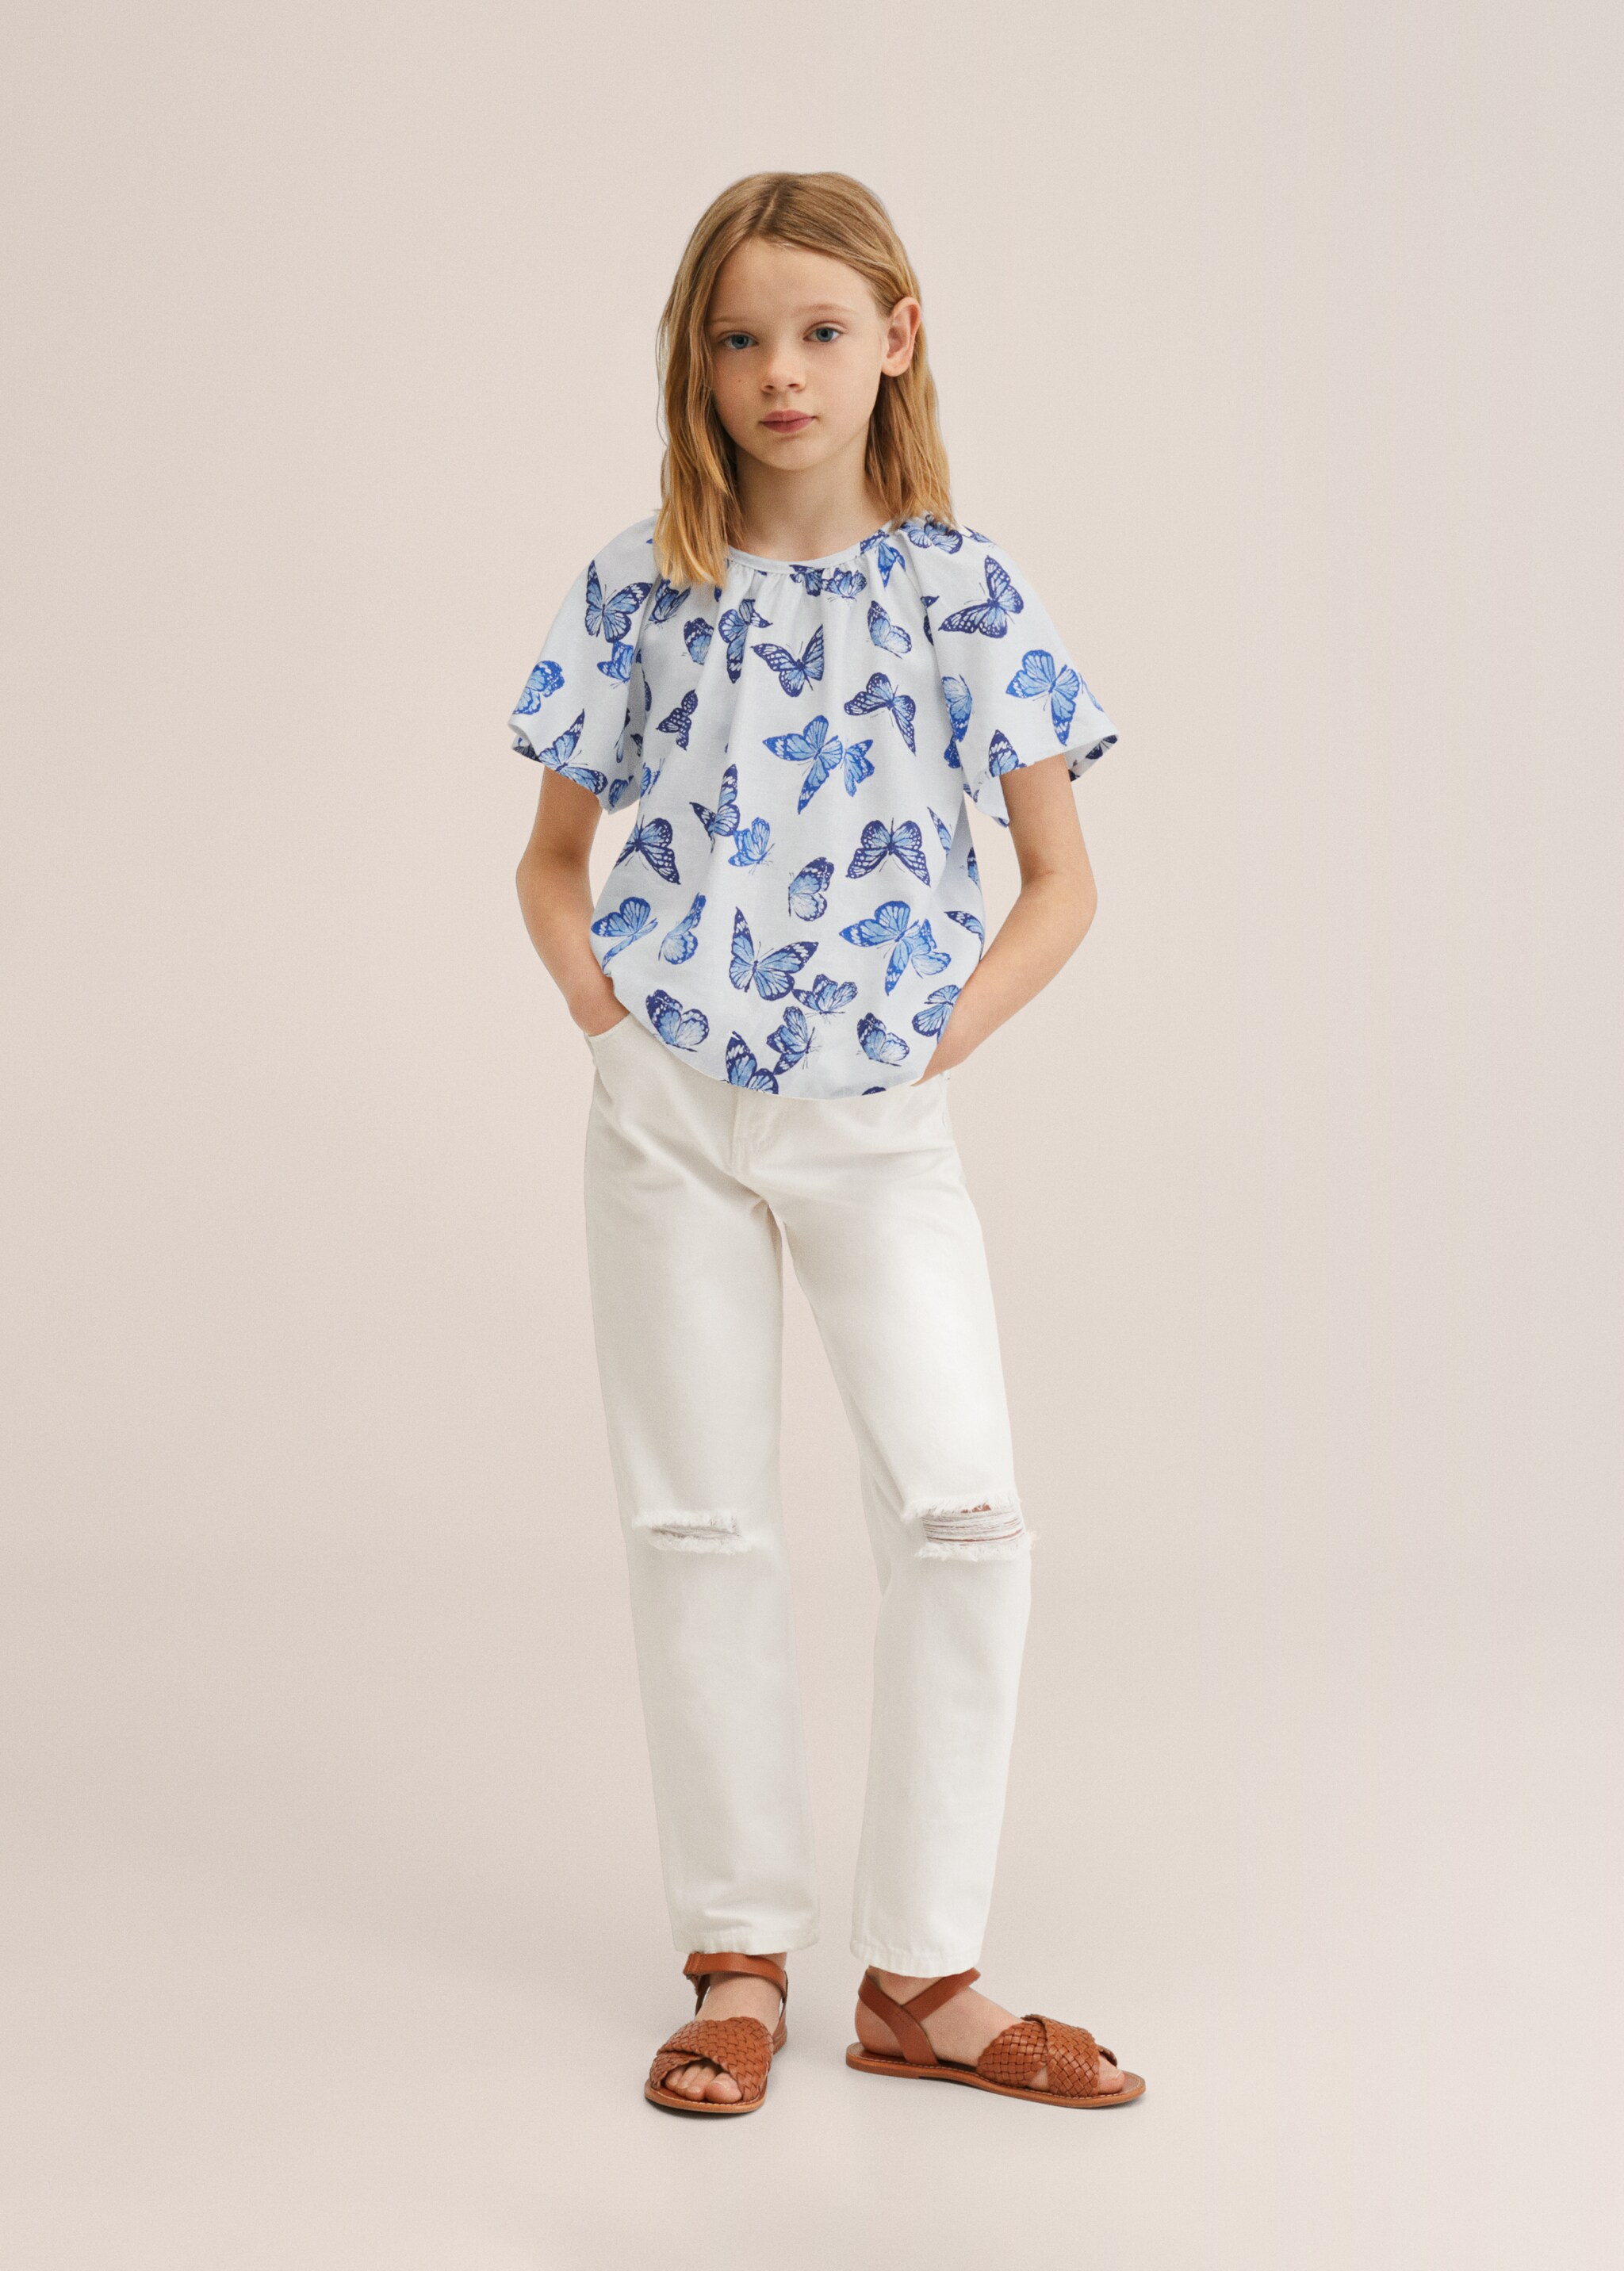 Linen blouse with butterflies - General plane